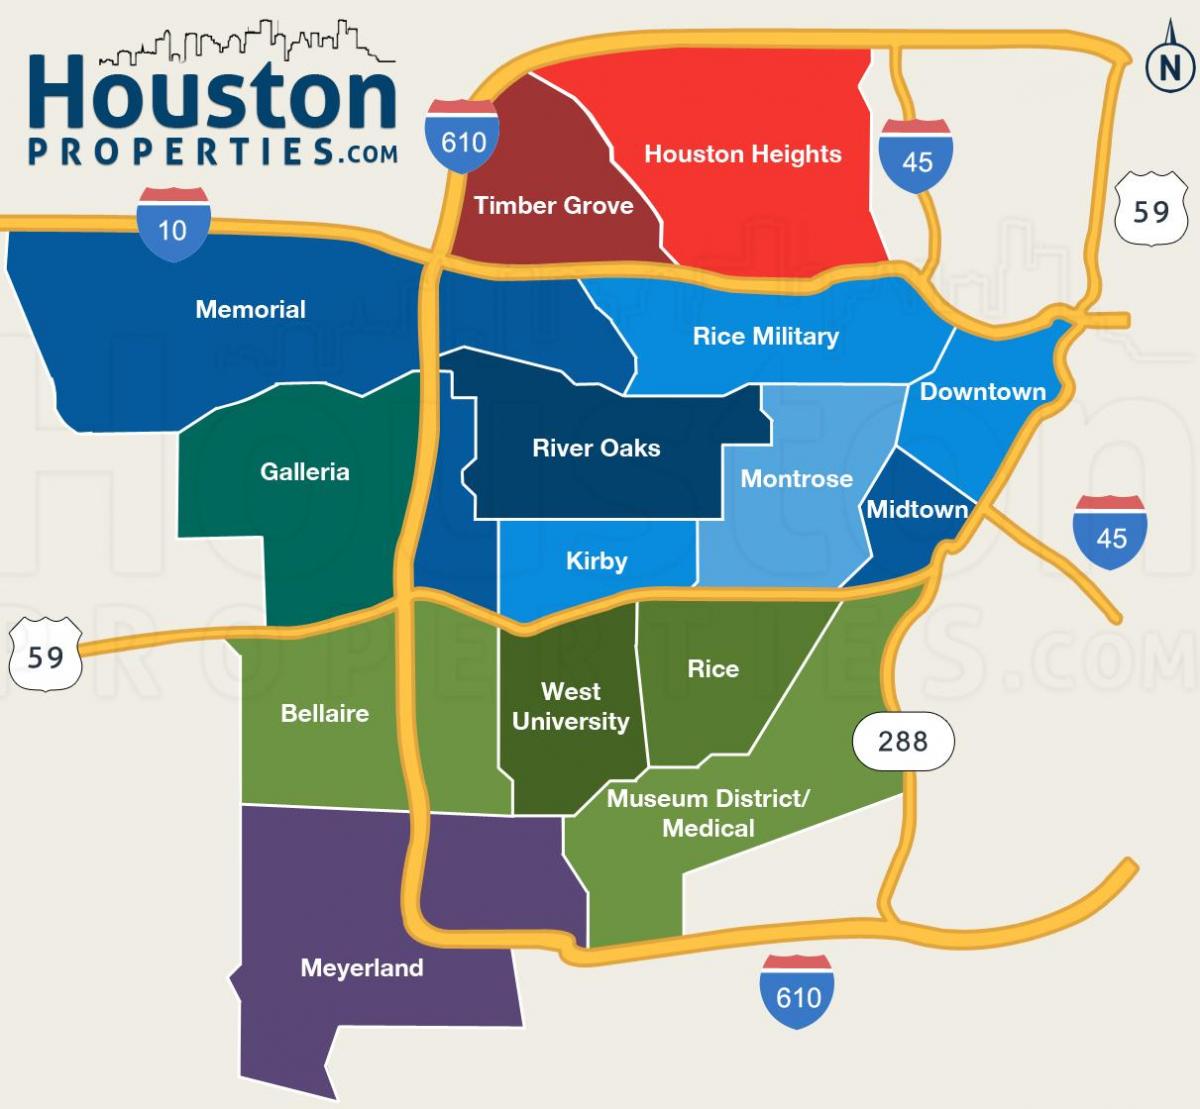 карта на Хјустон населби